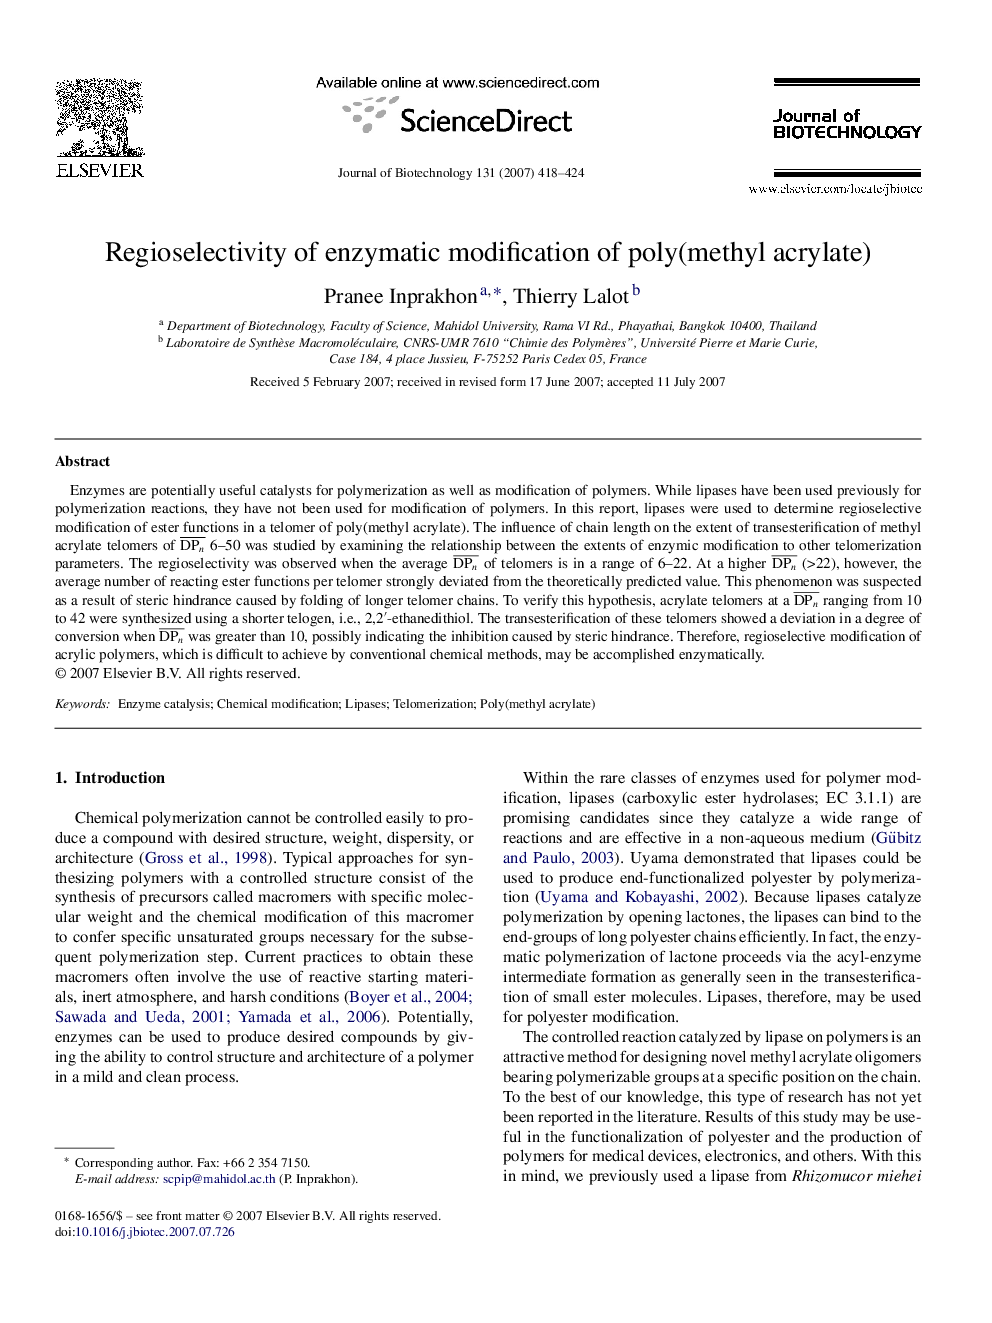 Regioselectivity of enzymatic modification of poly(methyl acrylate)